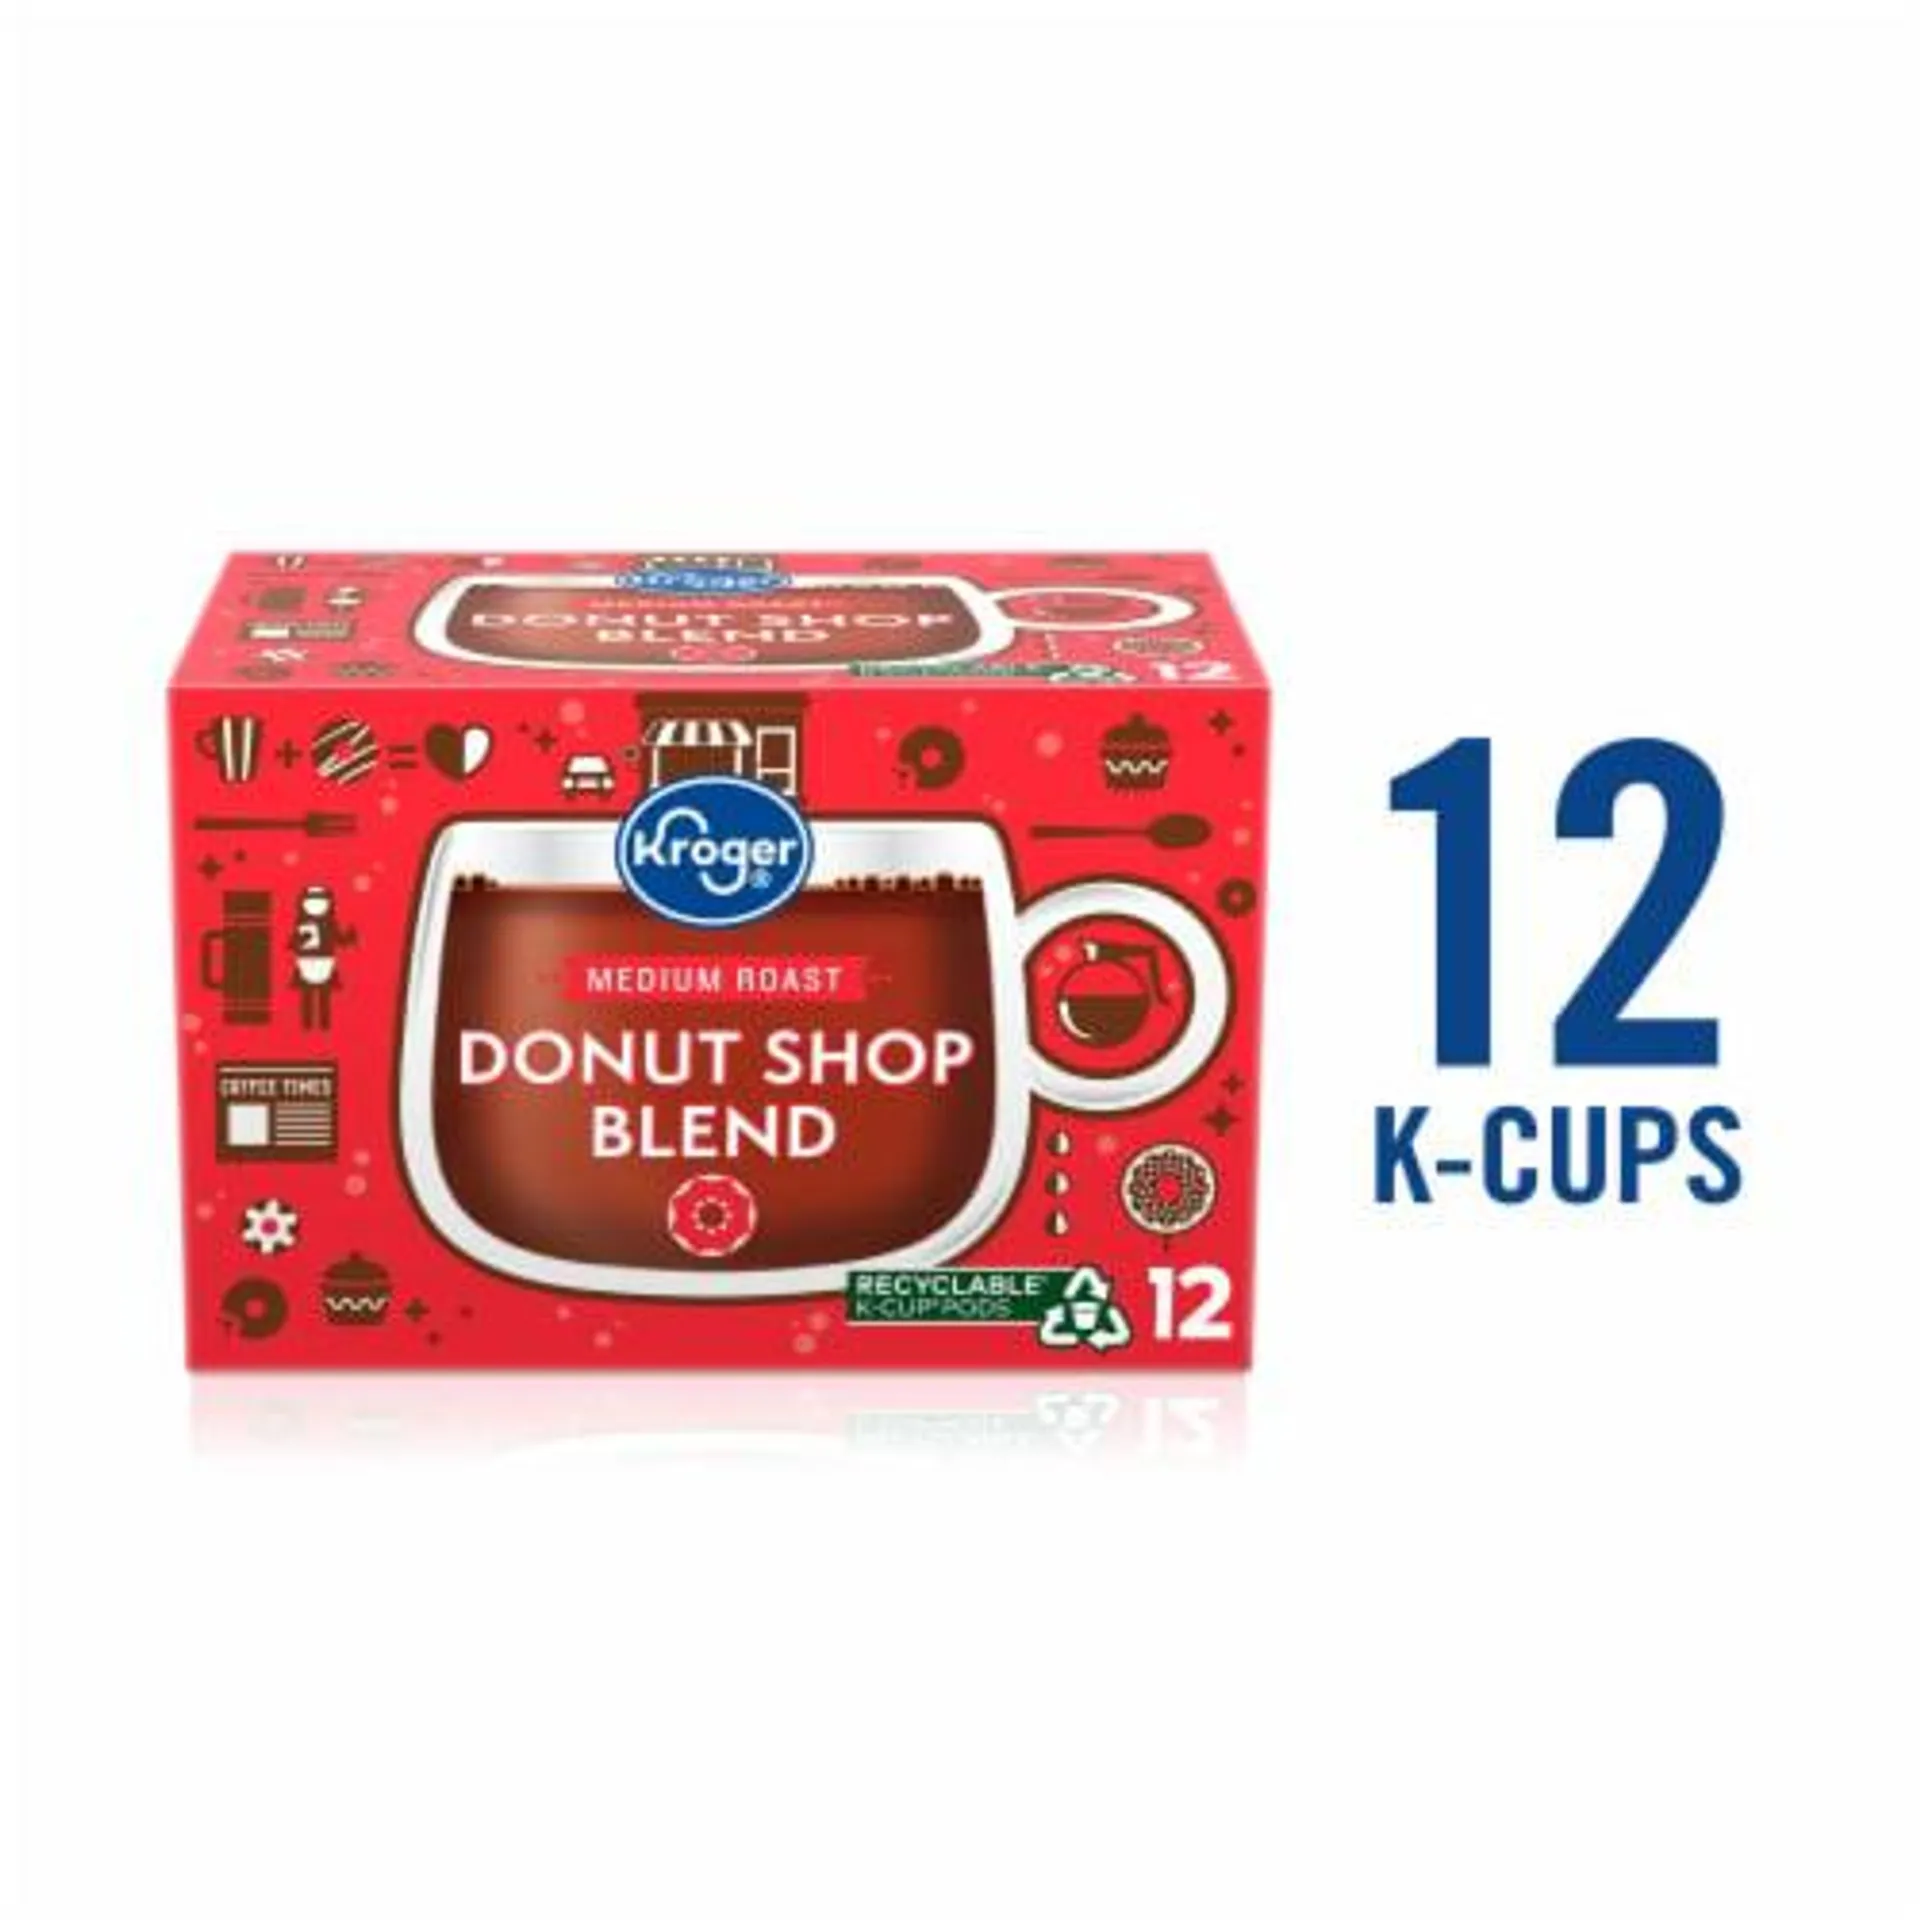 Kroger® Donut Shop Blend Medium Roast Coffee K-Cup Pods